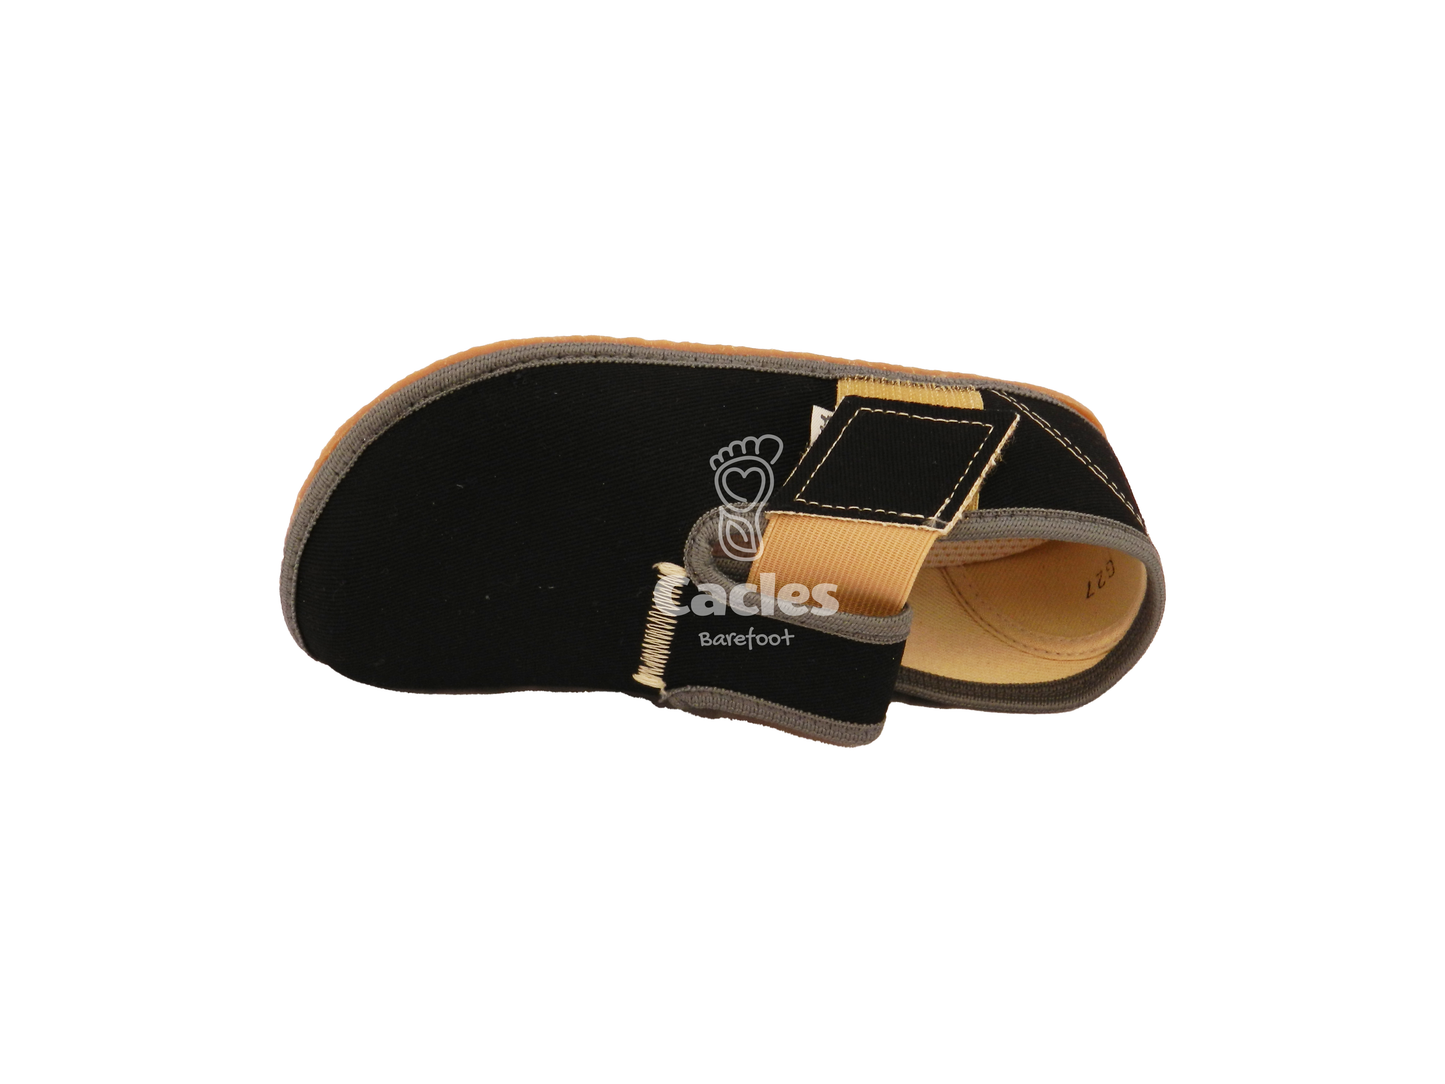 Pegres zapatillas algodón negro-Pegres-Cacles Barefoot